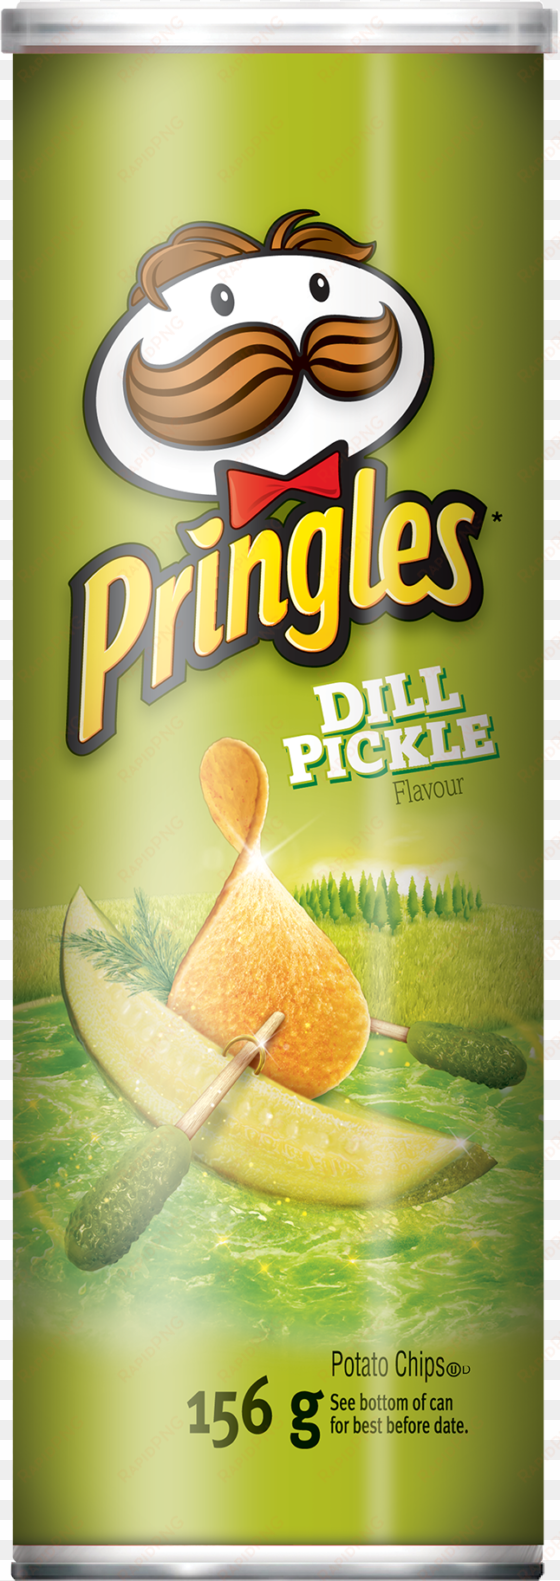 pringles* dill pickle flavour - pringles buffalo ranch potato chips 156 g